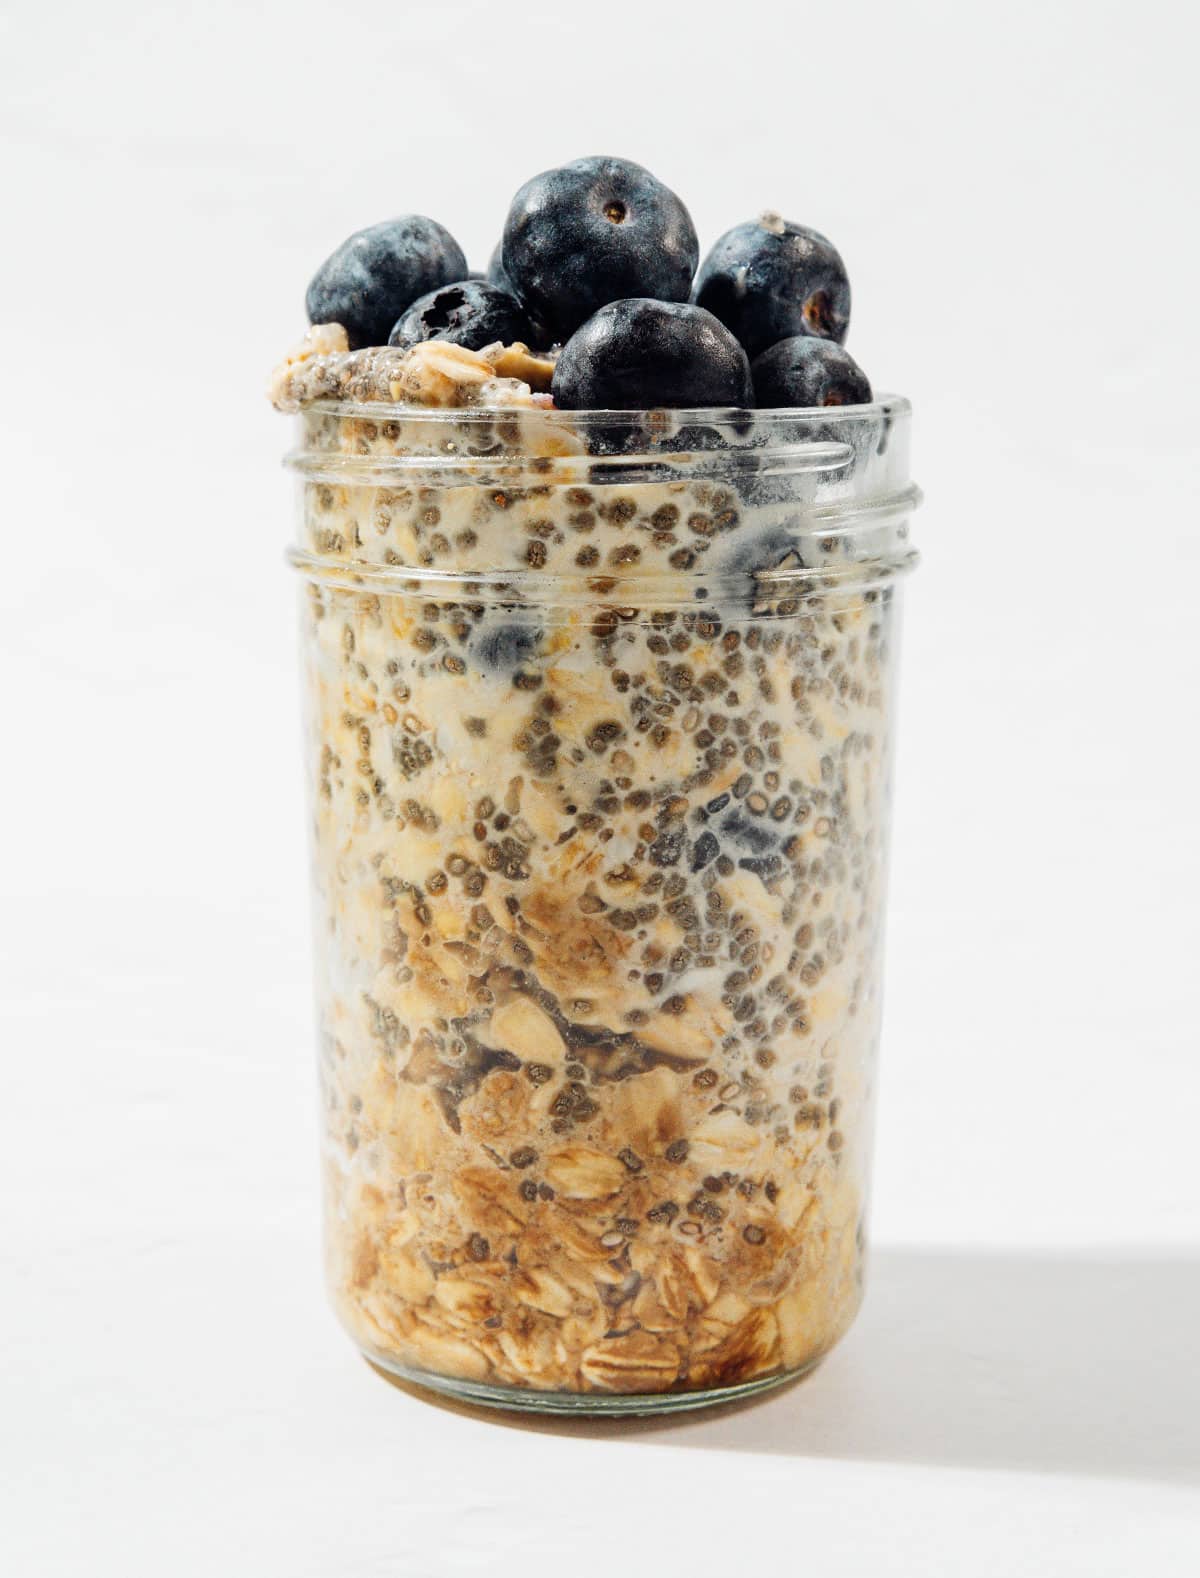 Blueberry overnight oats in a jar.